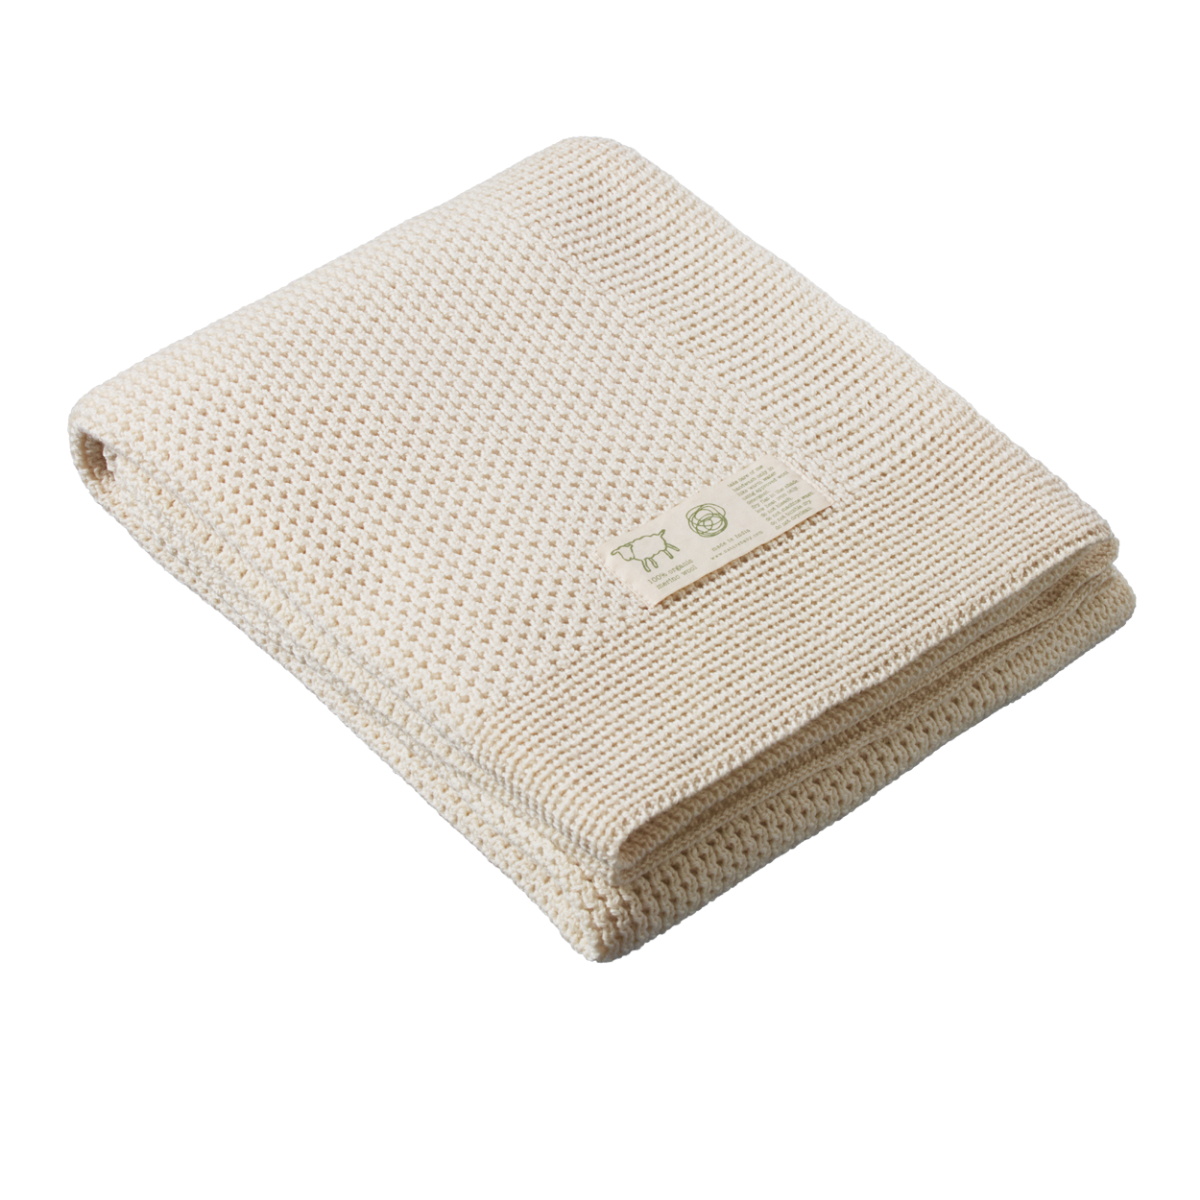 Merino Knit Blanket Cot Size Natural